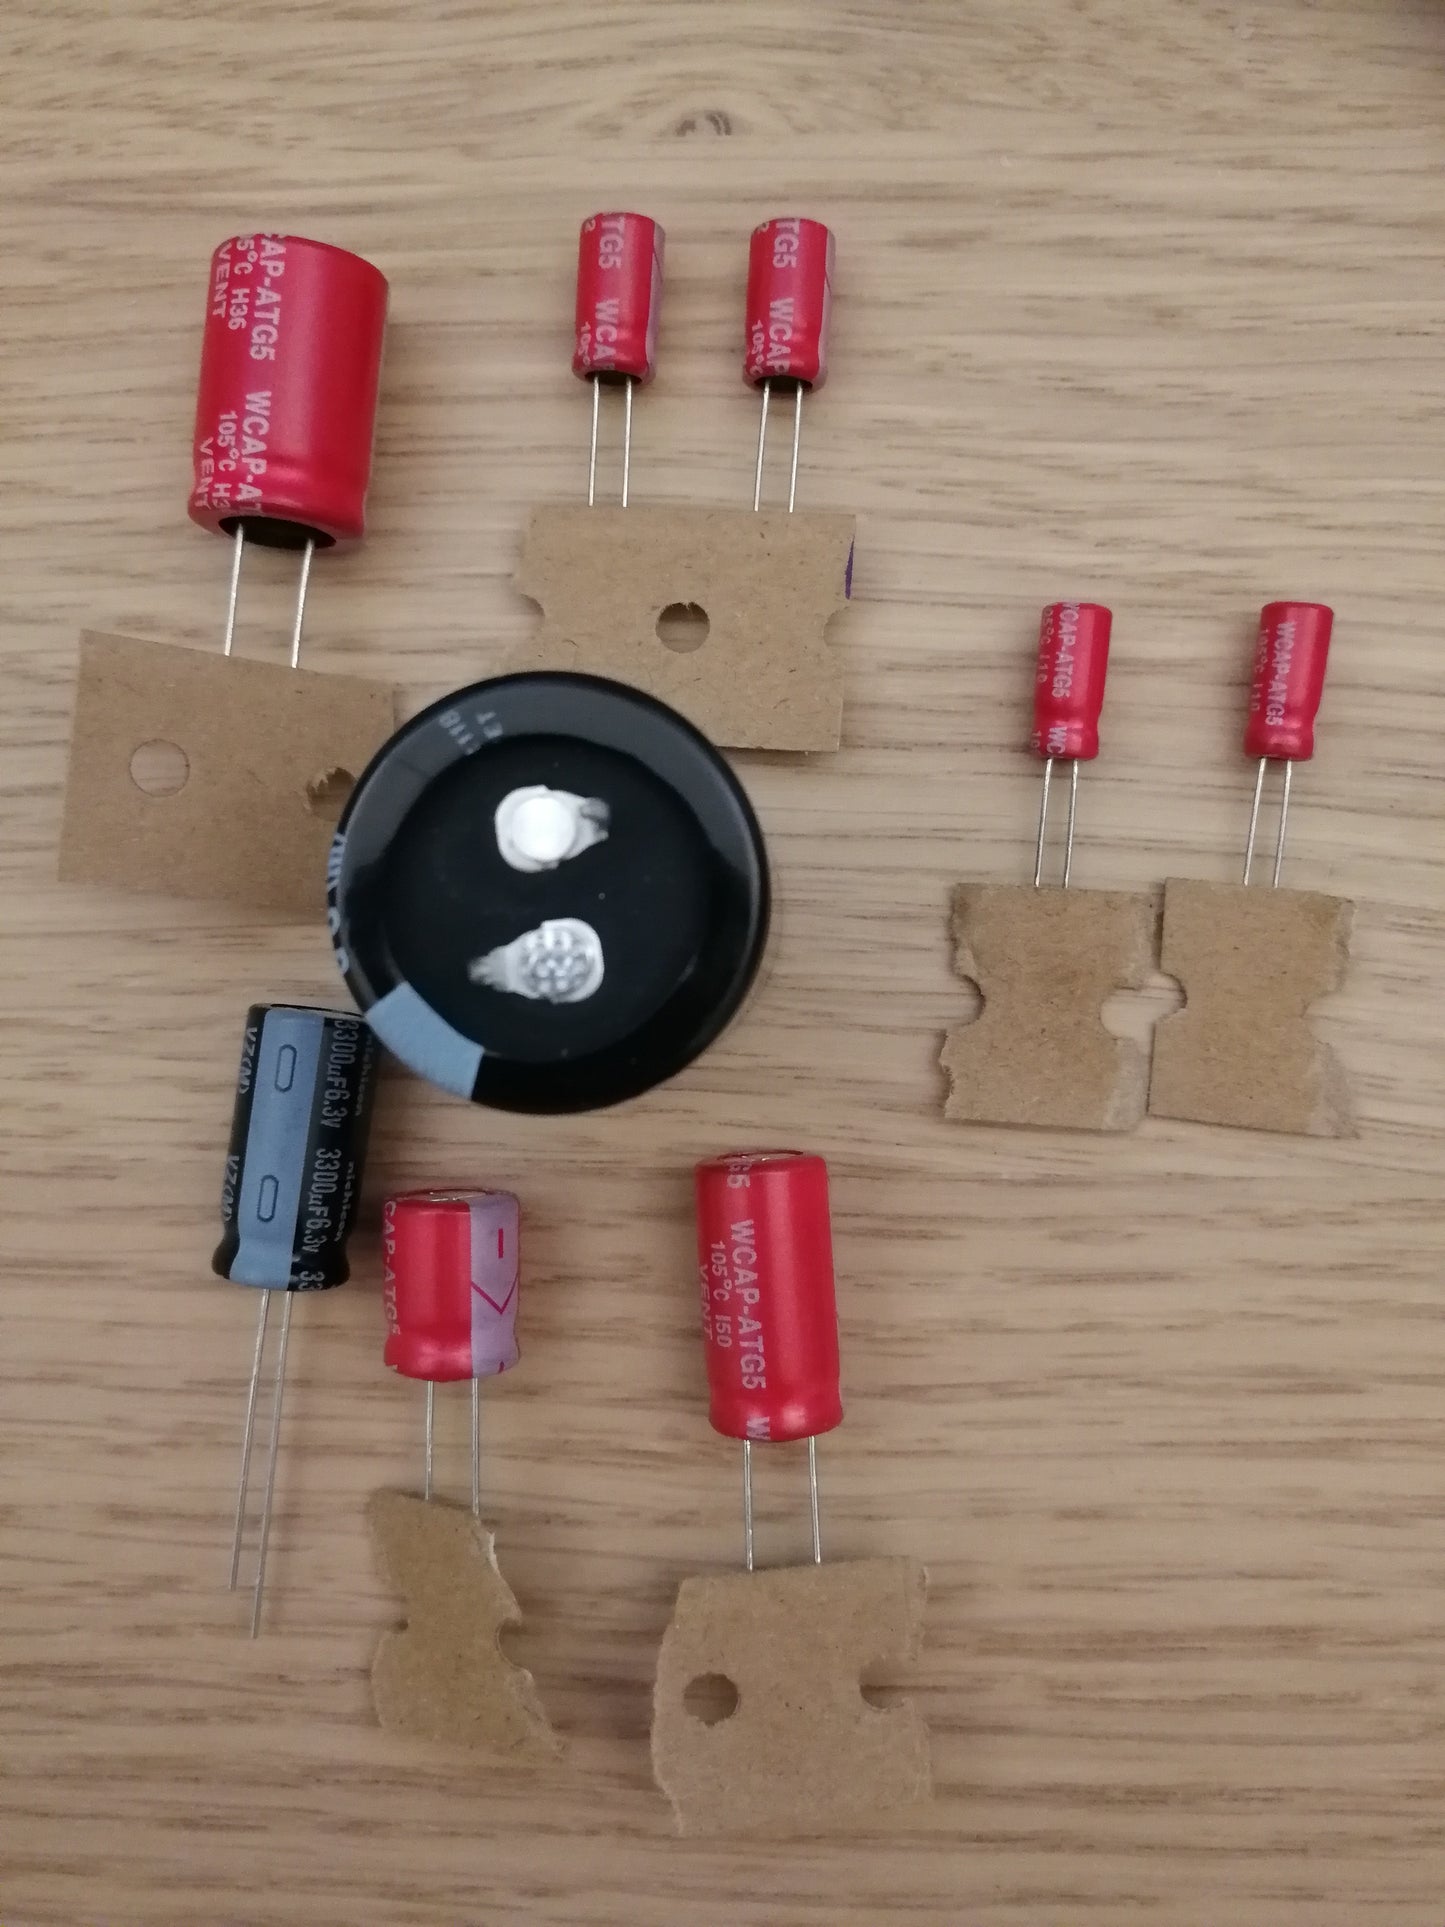 XBOX - PSU capacitor kits